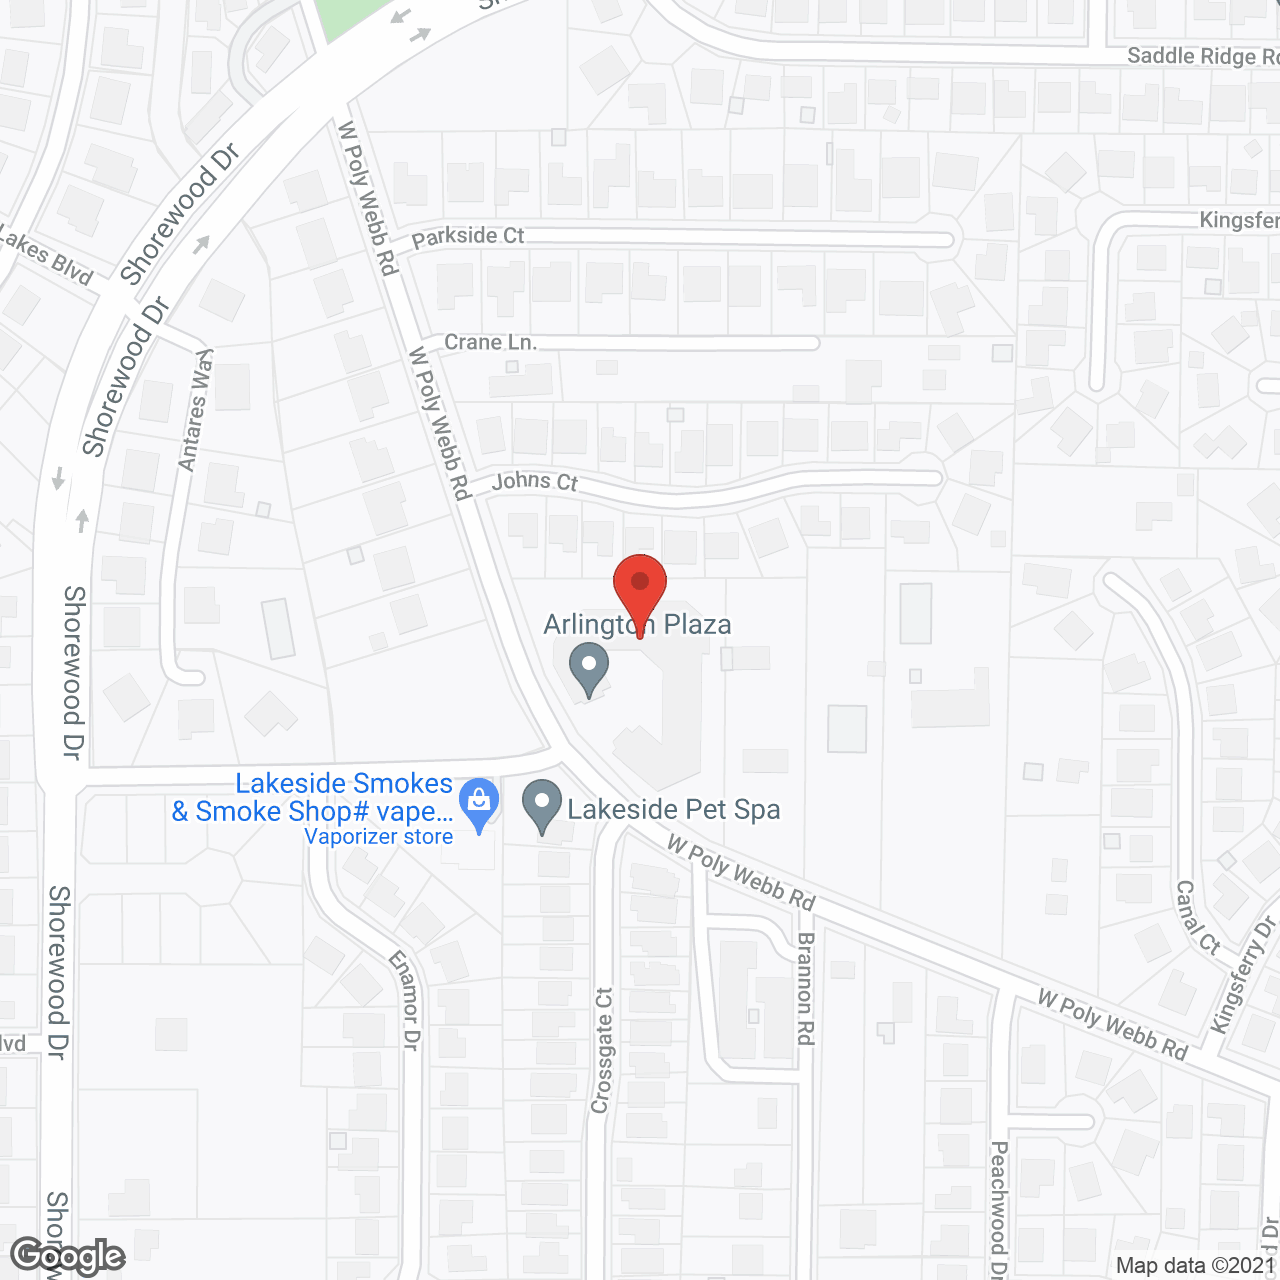 Holiday Arlington Plaza in google map